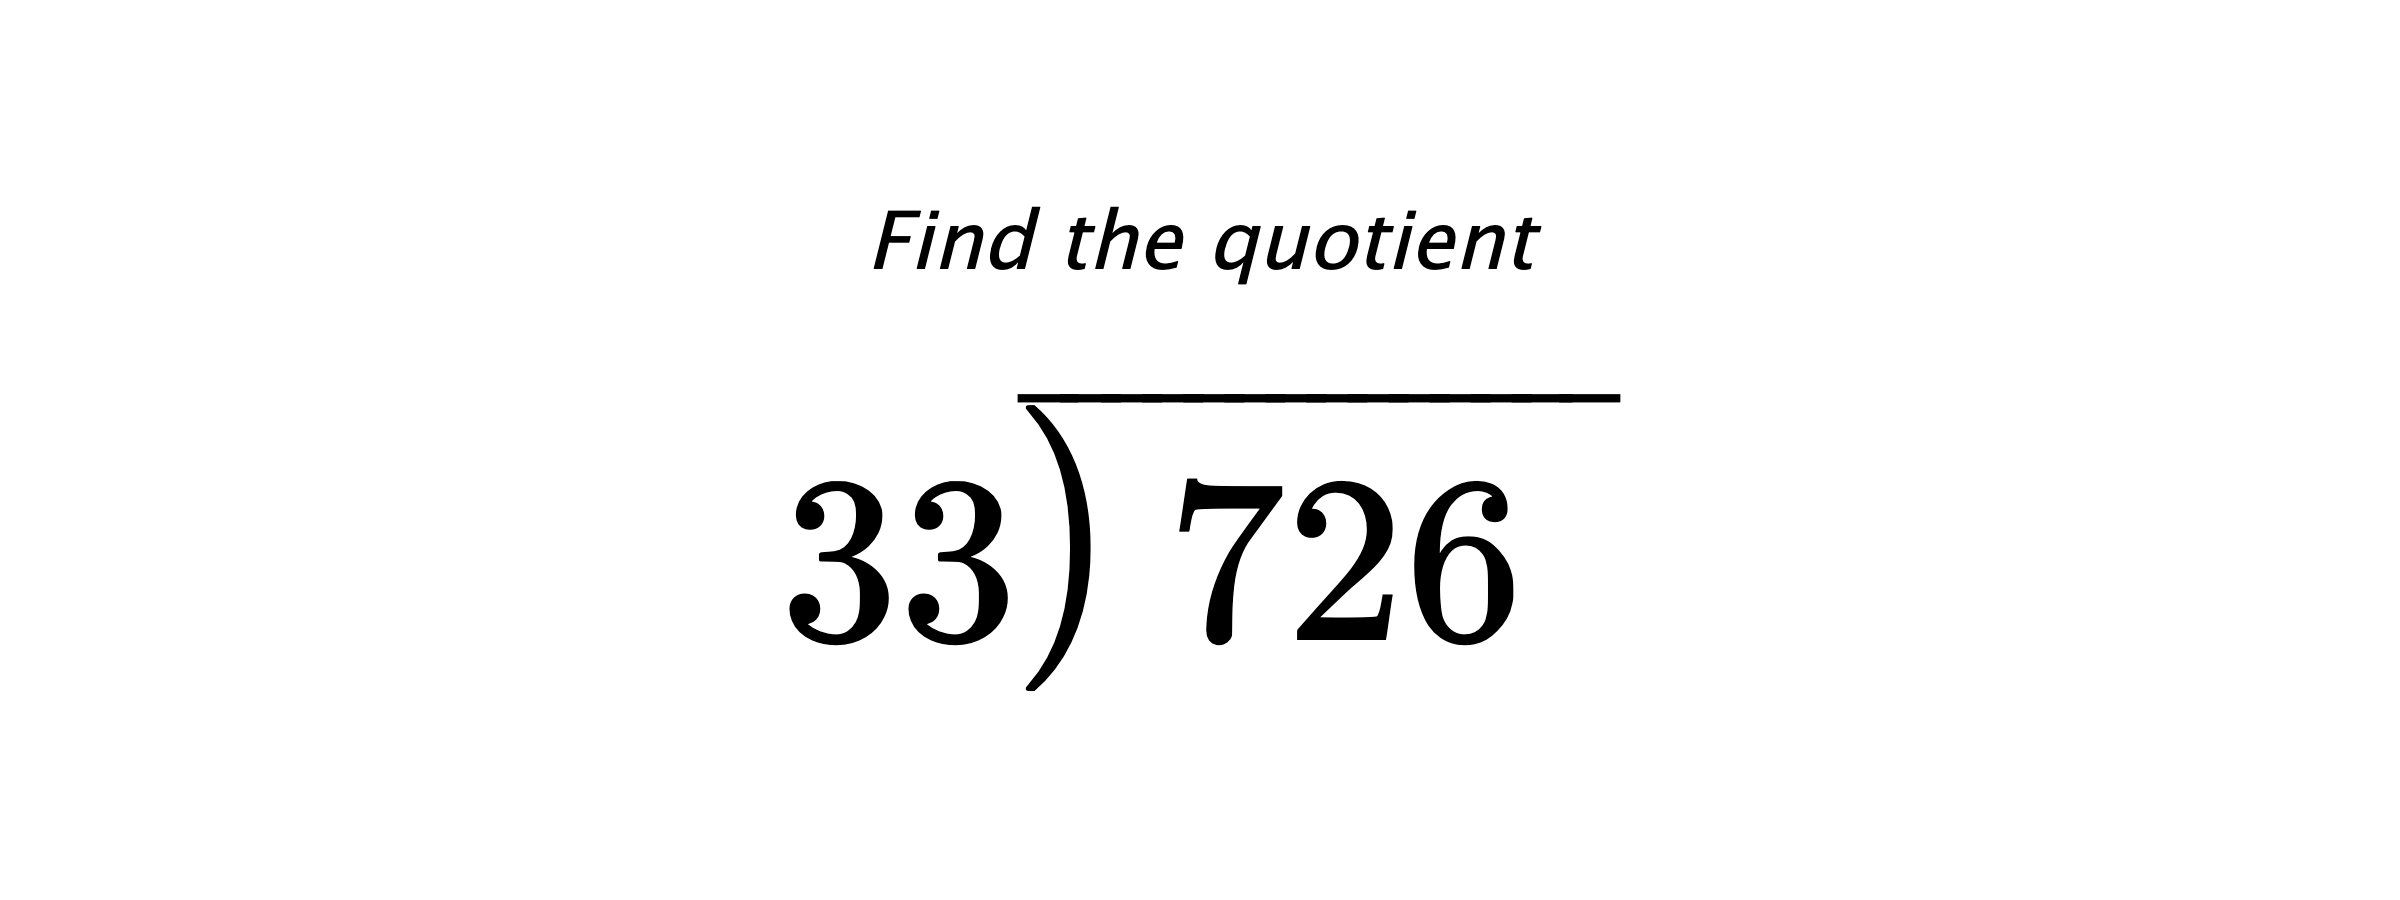 Find the quotient $ 33{\overline{\smash{\raise.3ex\hbox{$\big)$}}\,726\phantom{)}}} $